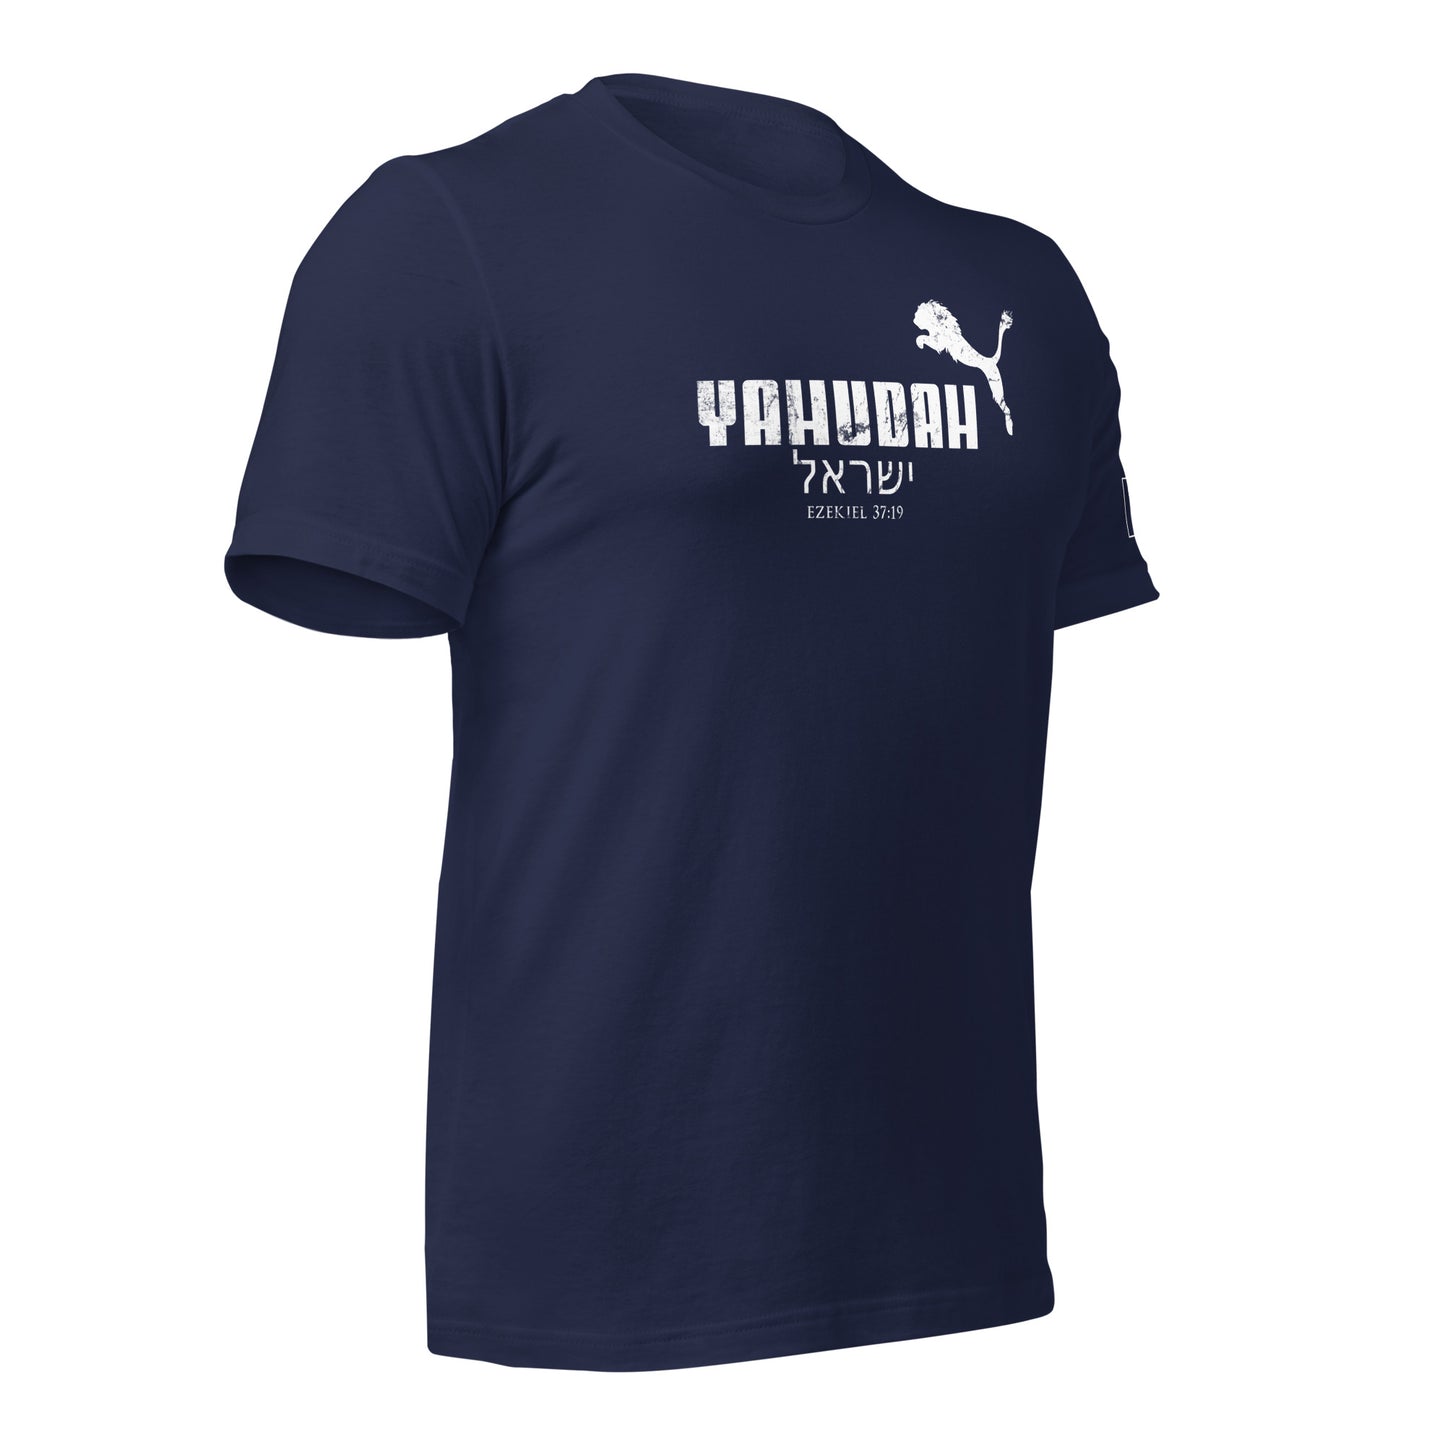 Yahudah Short-Sleeve T-Shirt (Solid color)